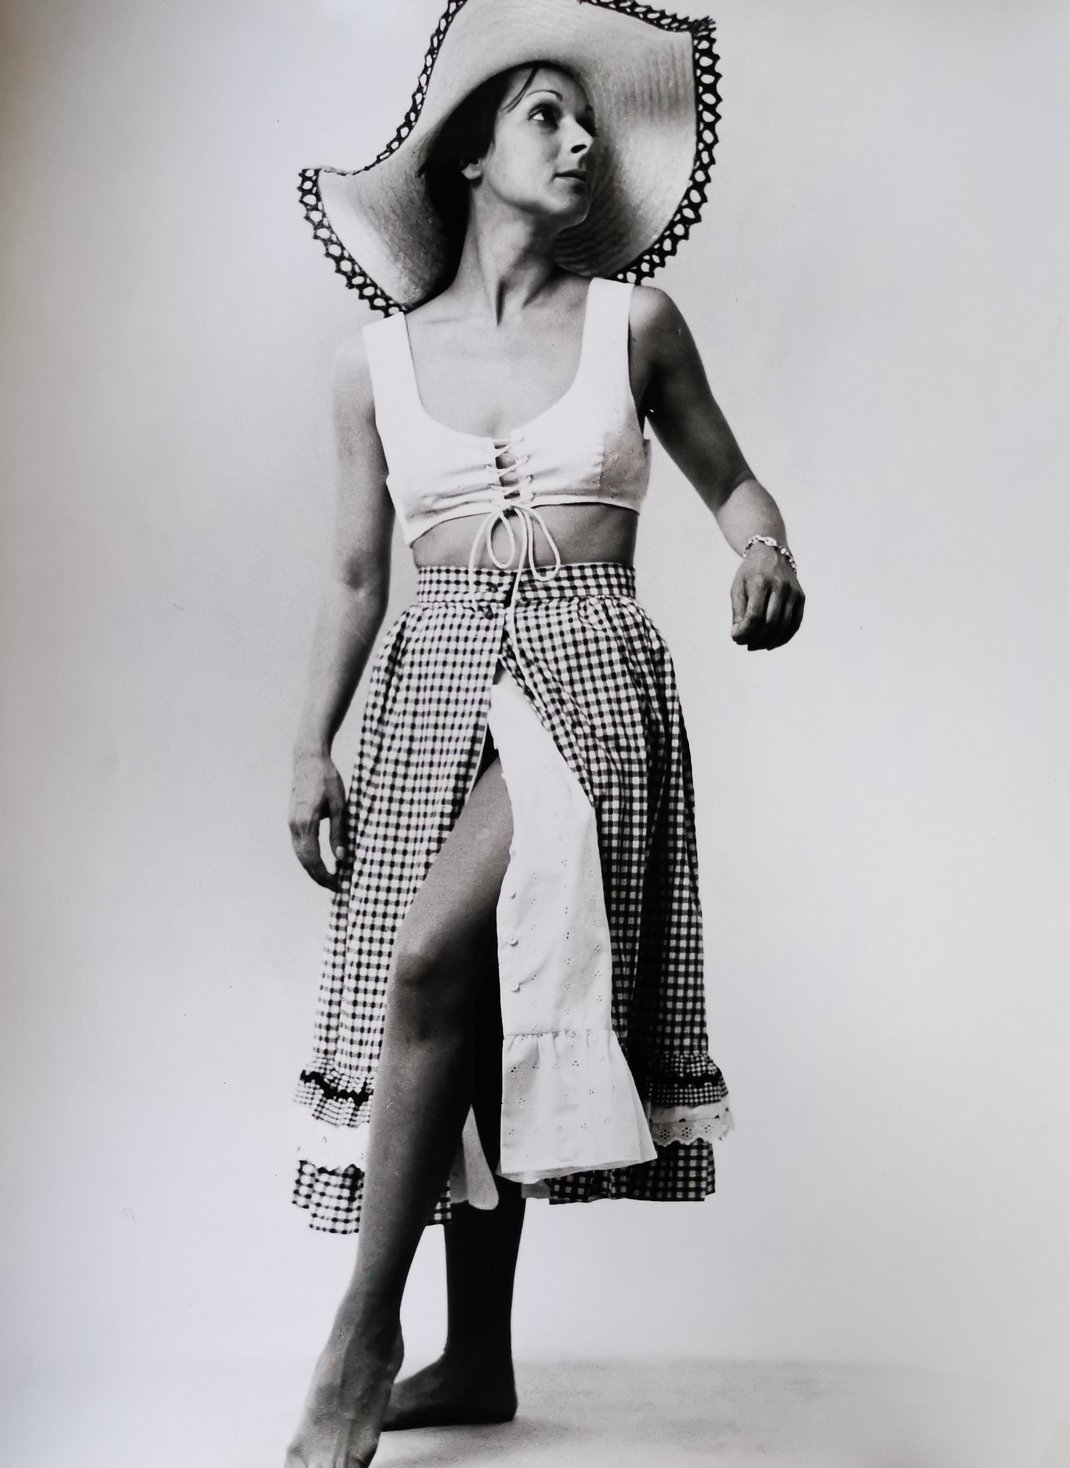 H Άννα Φόνσου, στα 70s, με σύνολο από την μπουτίκ της συναδέλφου της, Φλωρέττας Ζάννα